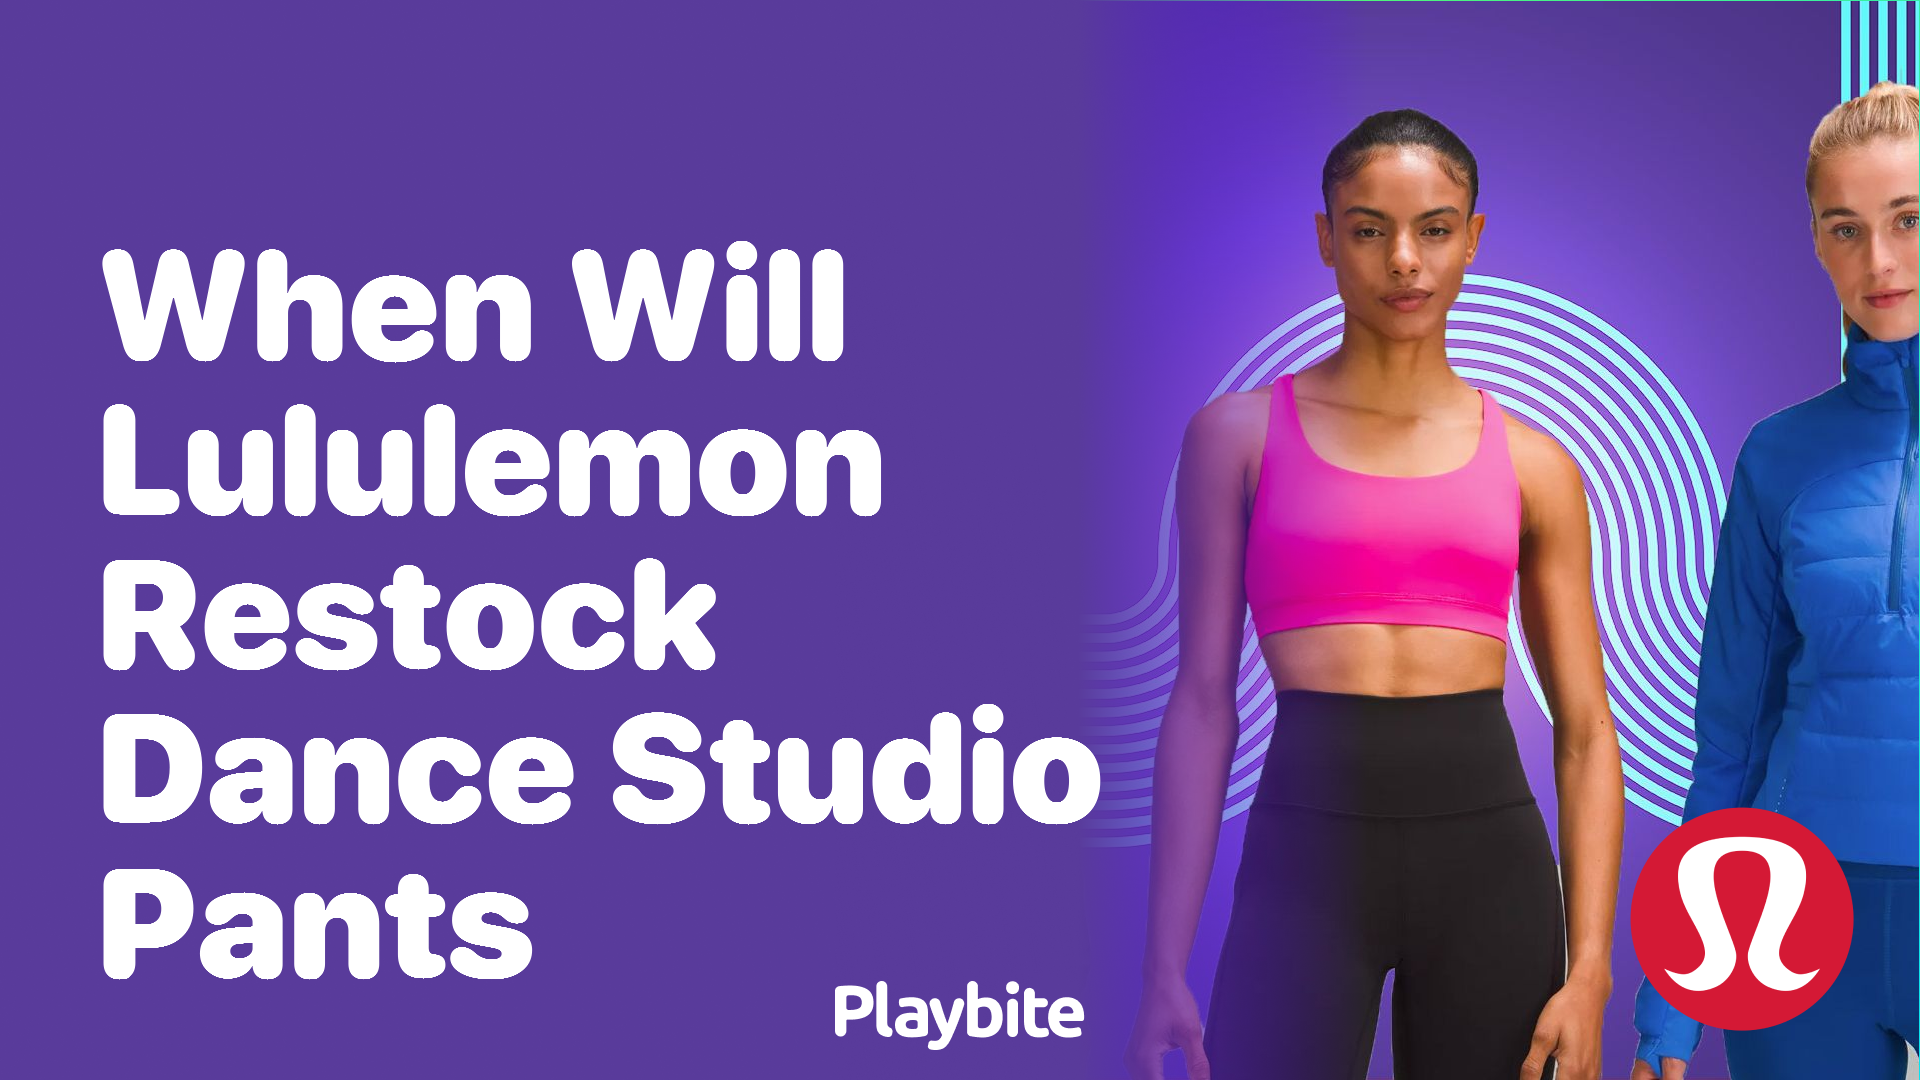 When Will Lululemon Restock Dance Studio Pants? - Playbite